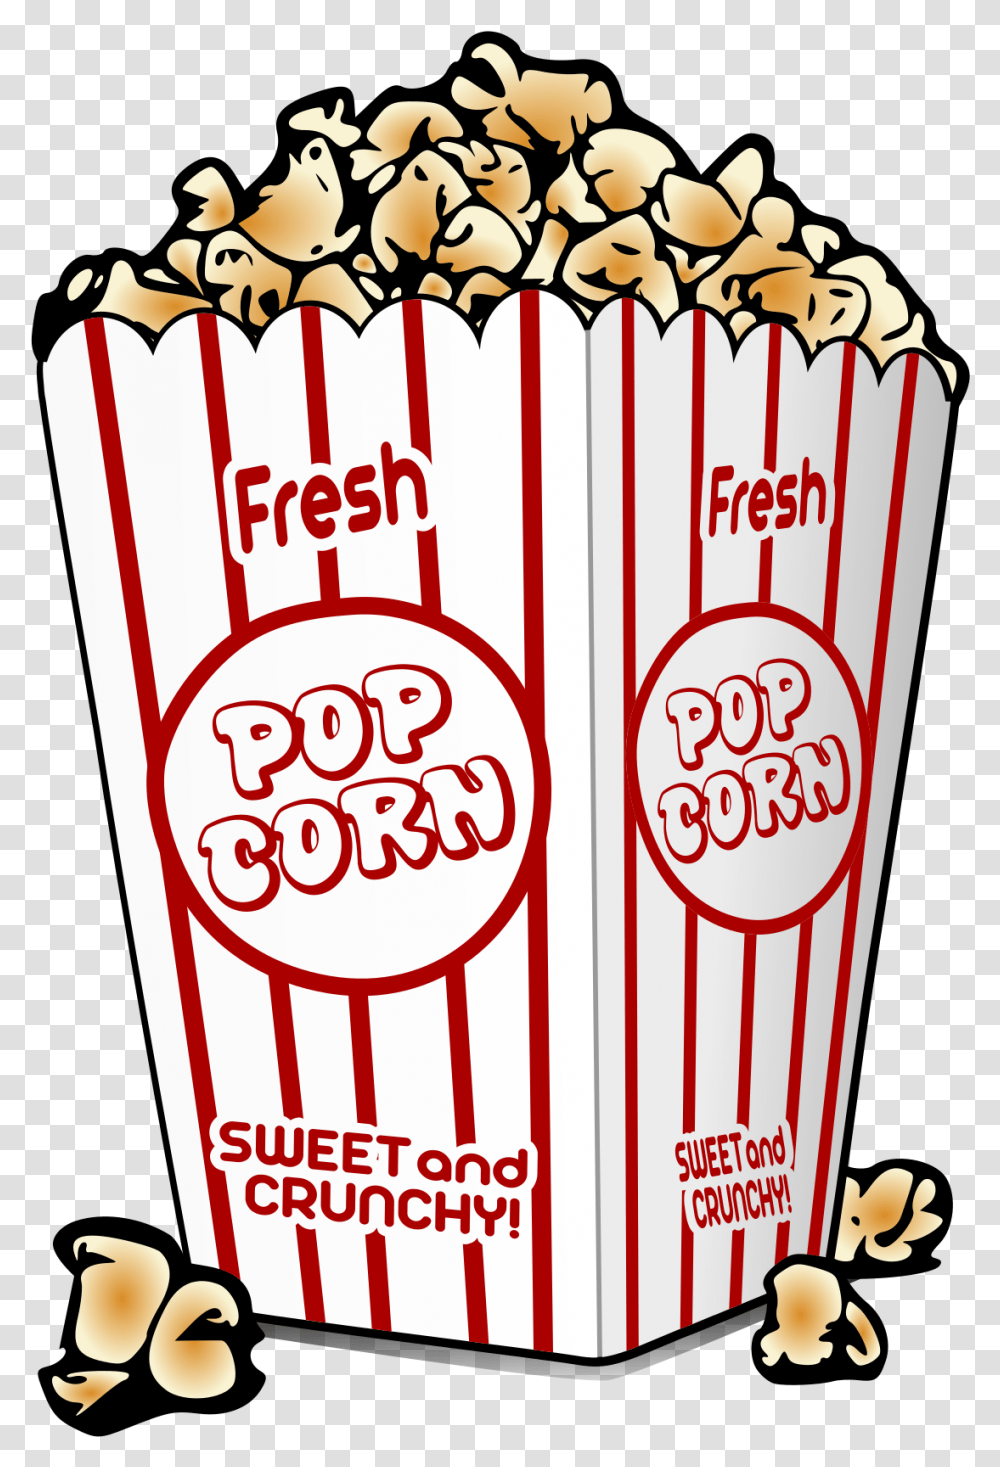 Popcorn Pictures Movie Theatre Popcorn Cartoon, Food, Snack, Soda, Beverage Transparent Png